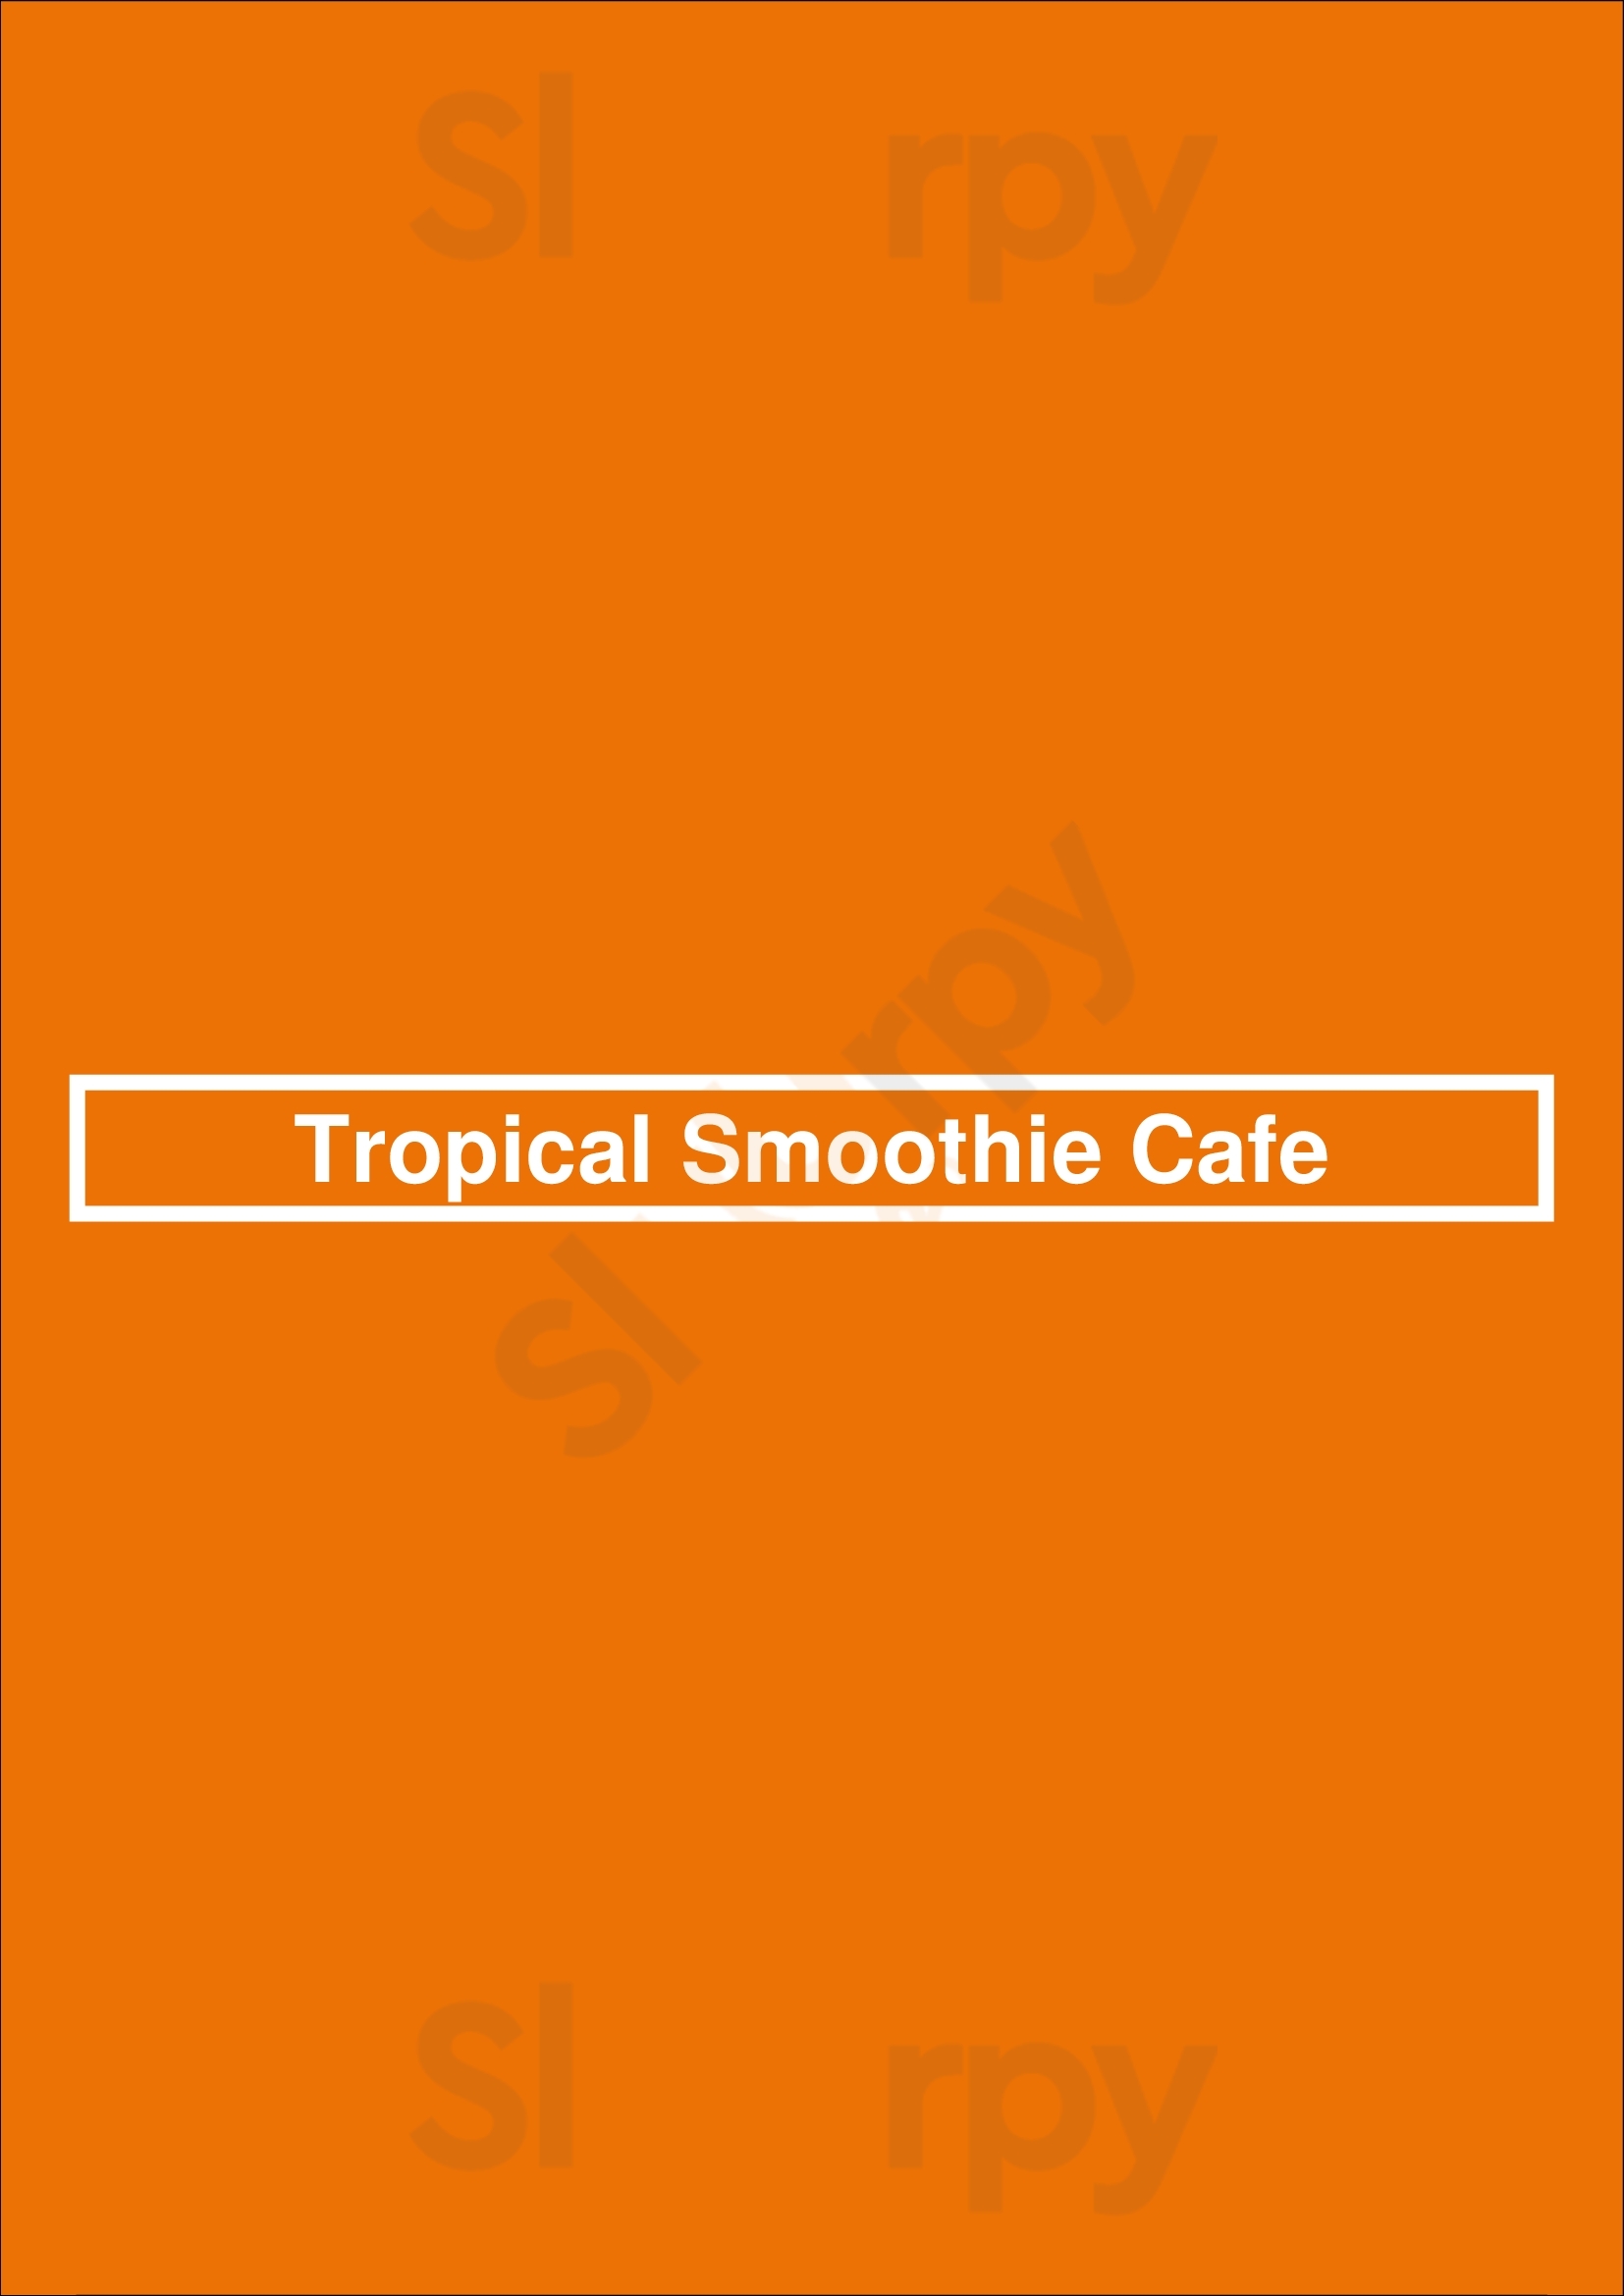 Tropical Smoothie Cafe Jacksonville Menu - 1